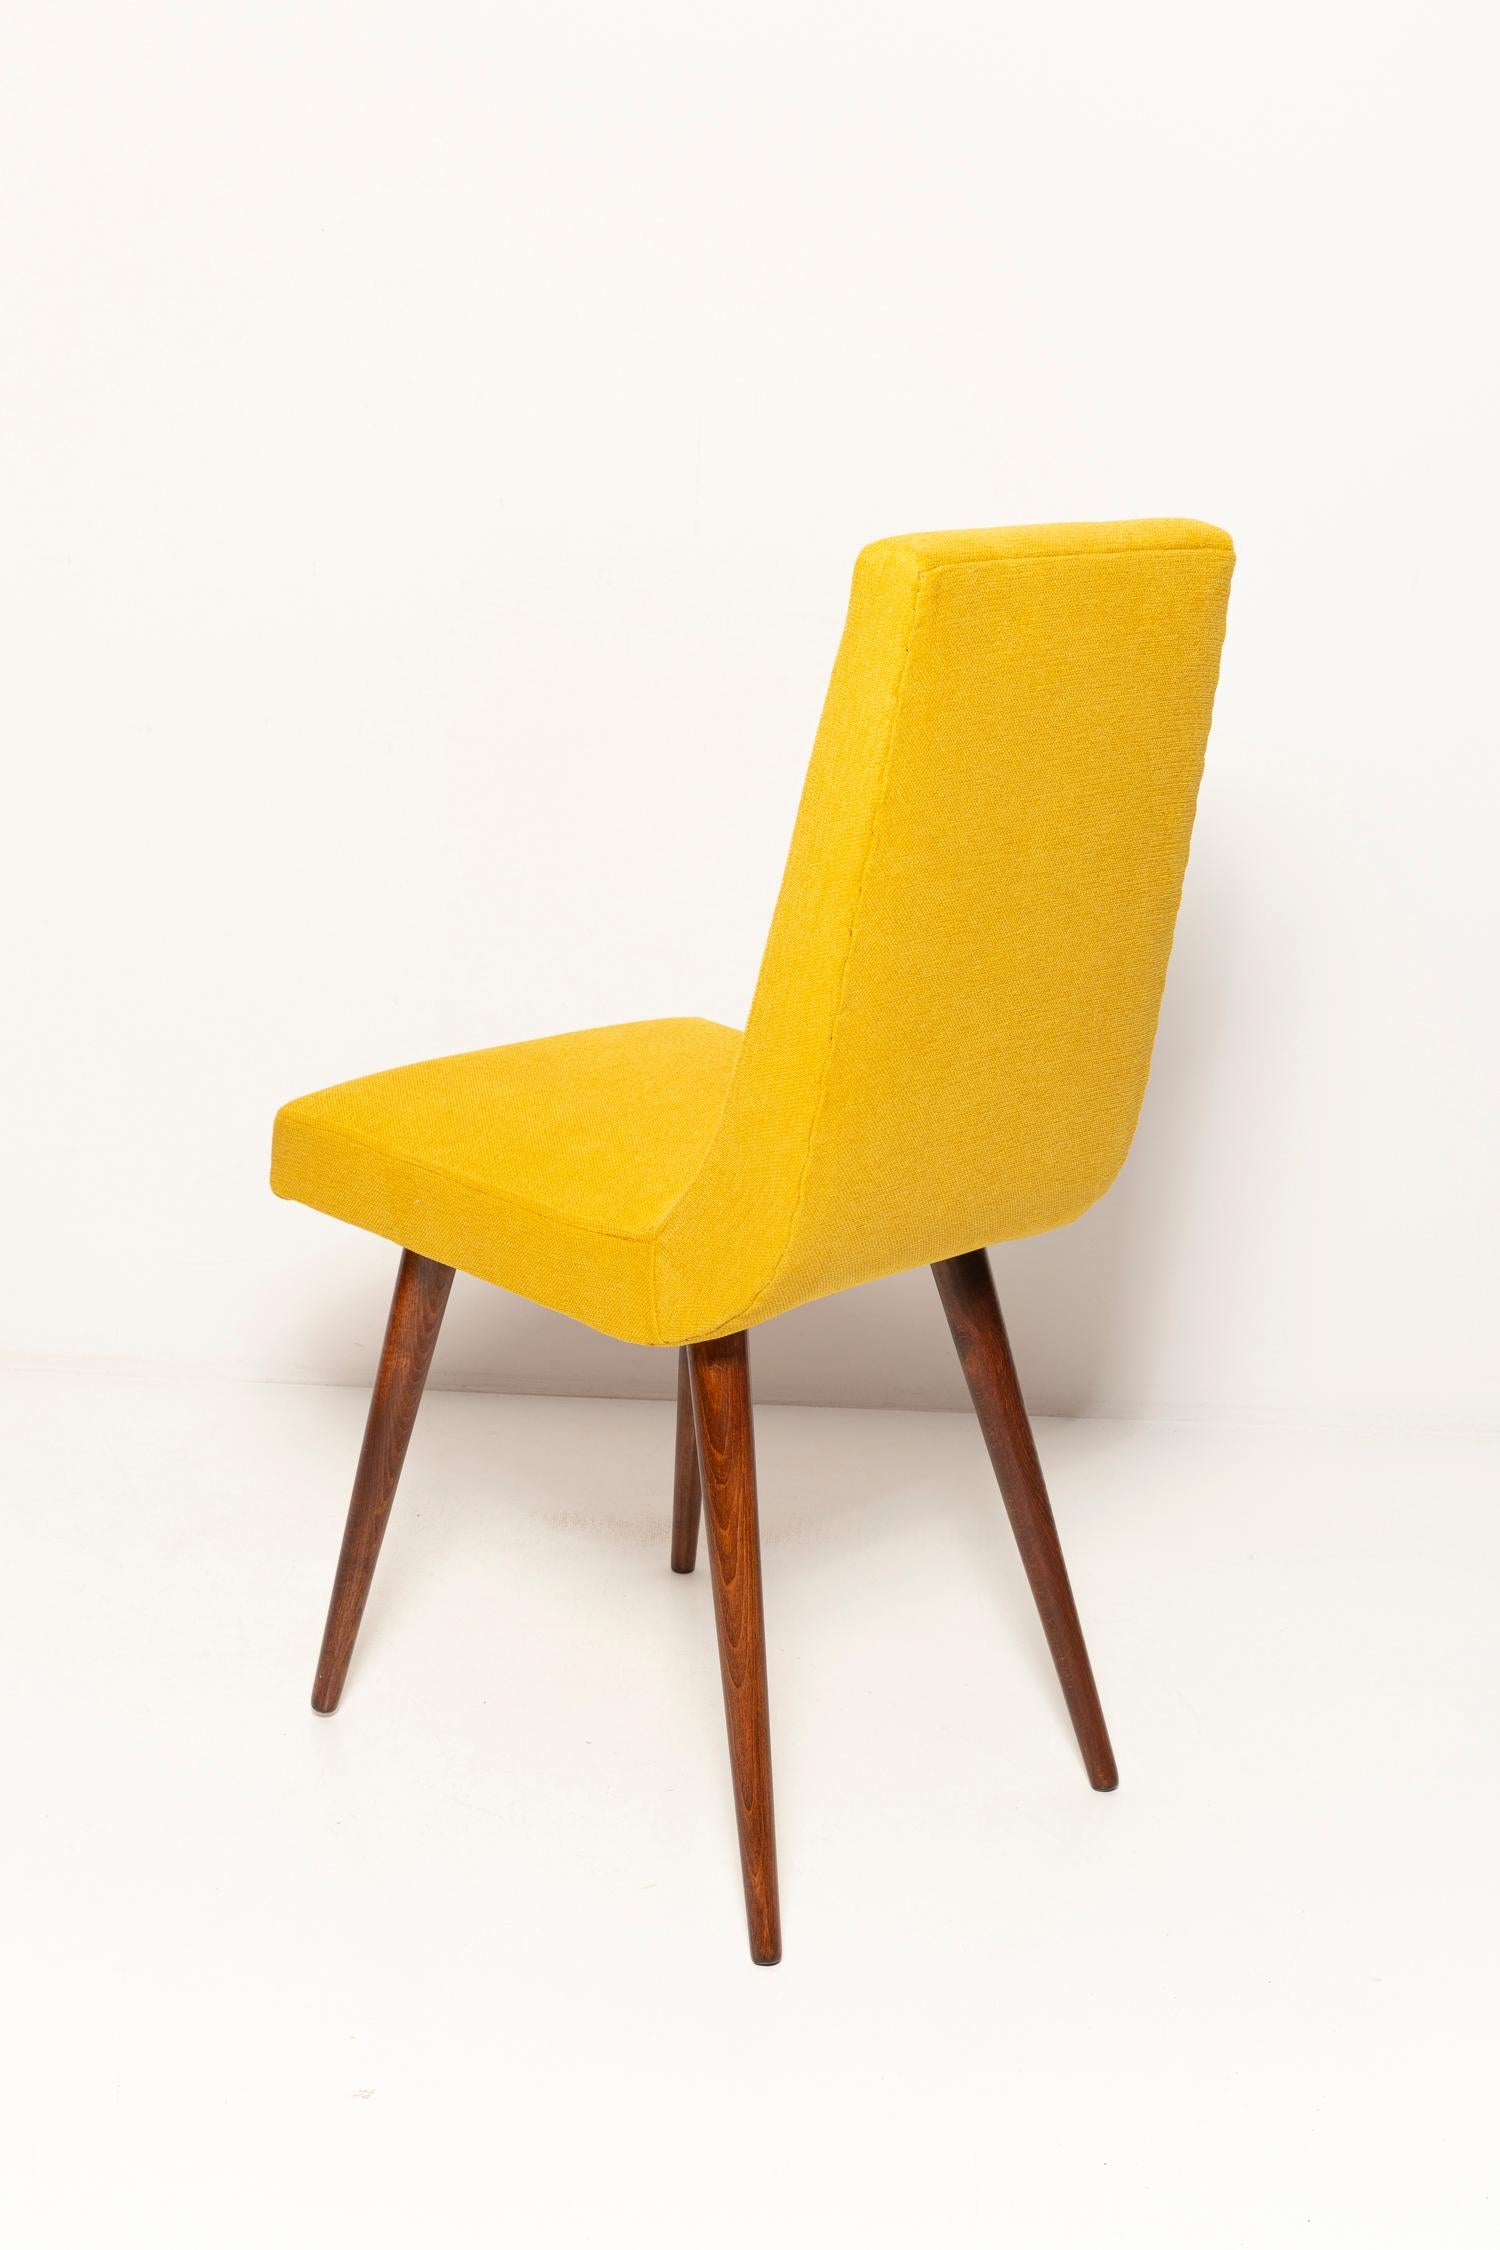 Midcentury Mustard Yellow Wool Chair, Rajmund Halas, Europe, 1960s For Sale 5